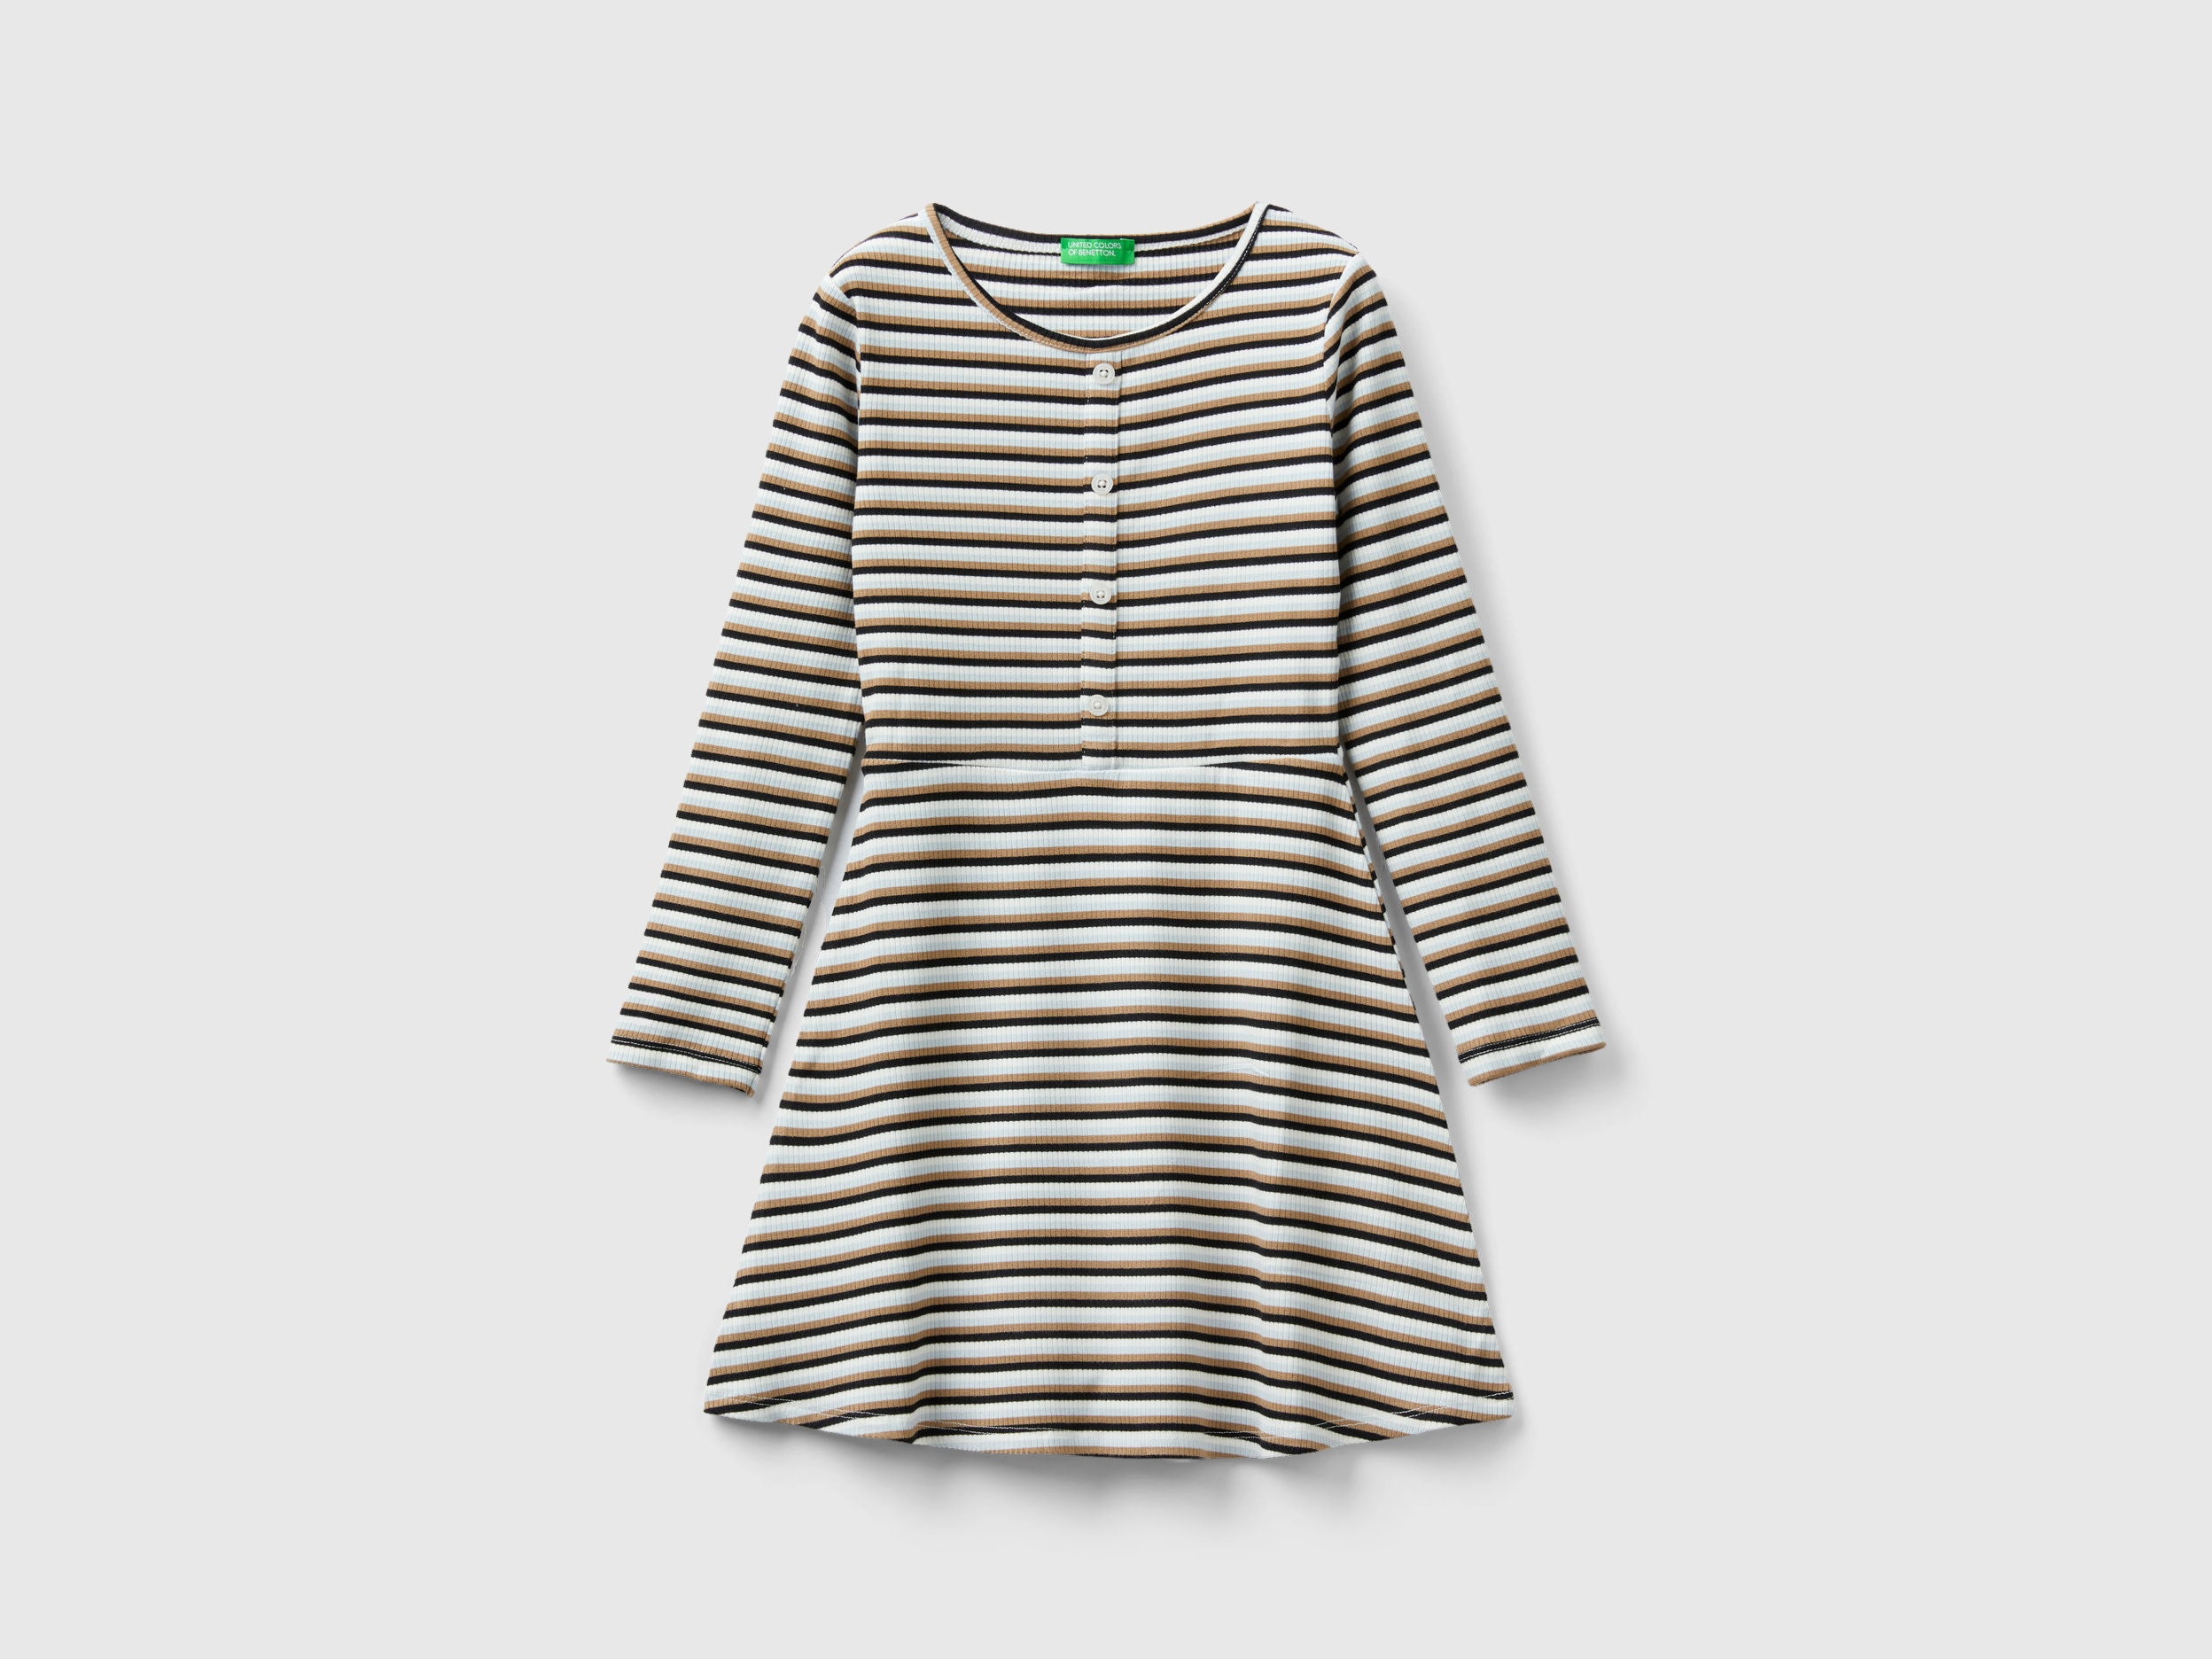 Benetton, Striped Shirt Dress, size 3XL, Multi-color, Kids